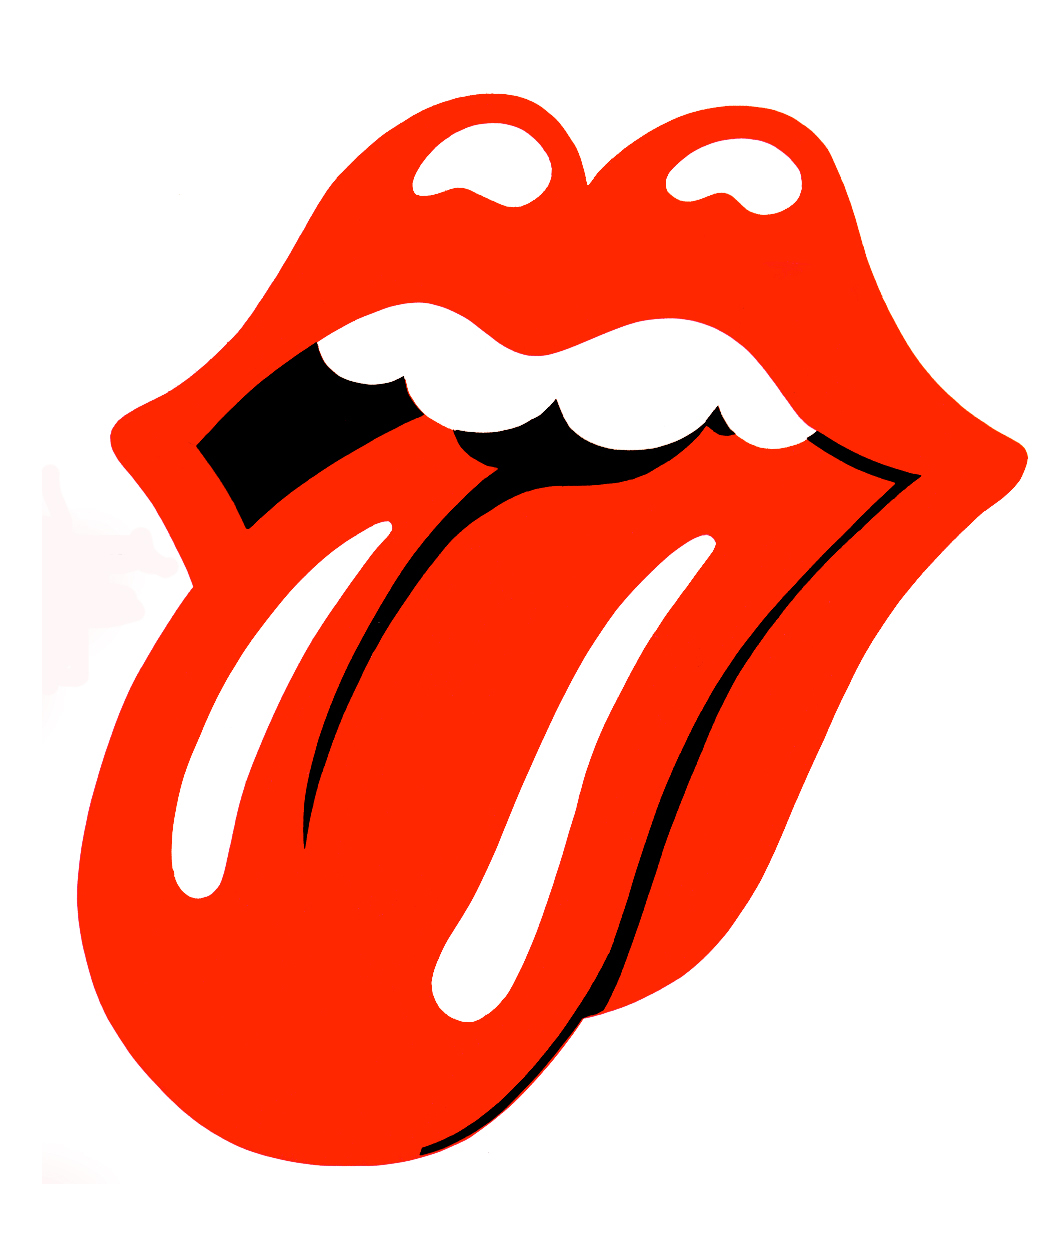 Rolling stones logo Wallpaper